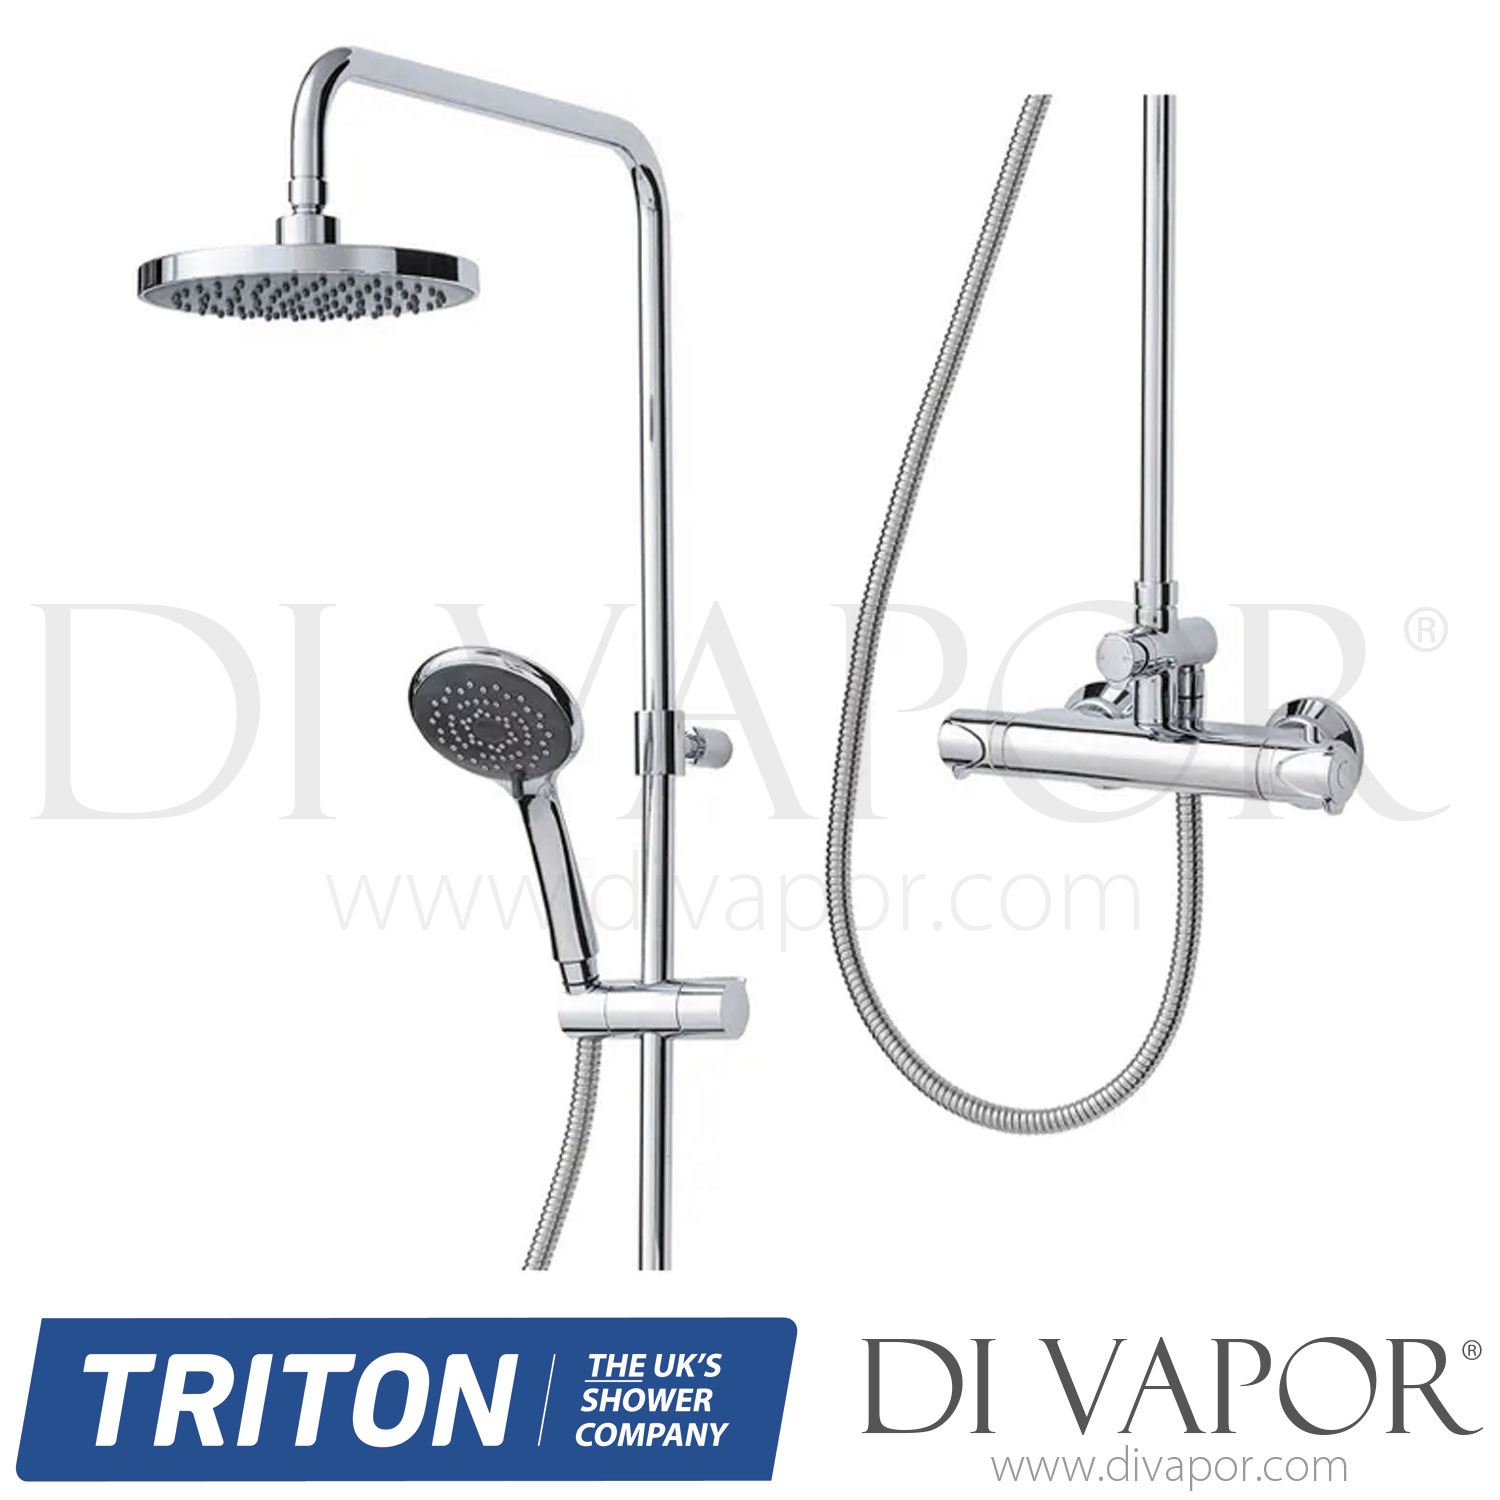 Triton Tian Bar Diverter Mixer Shower - October 2020 - Spare Parts - TR DV 356